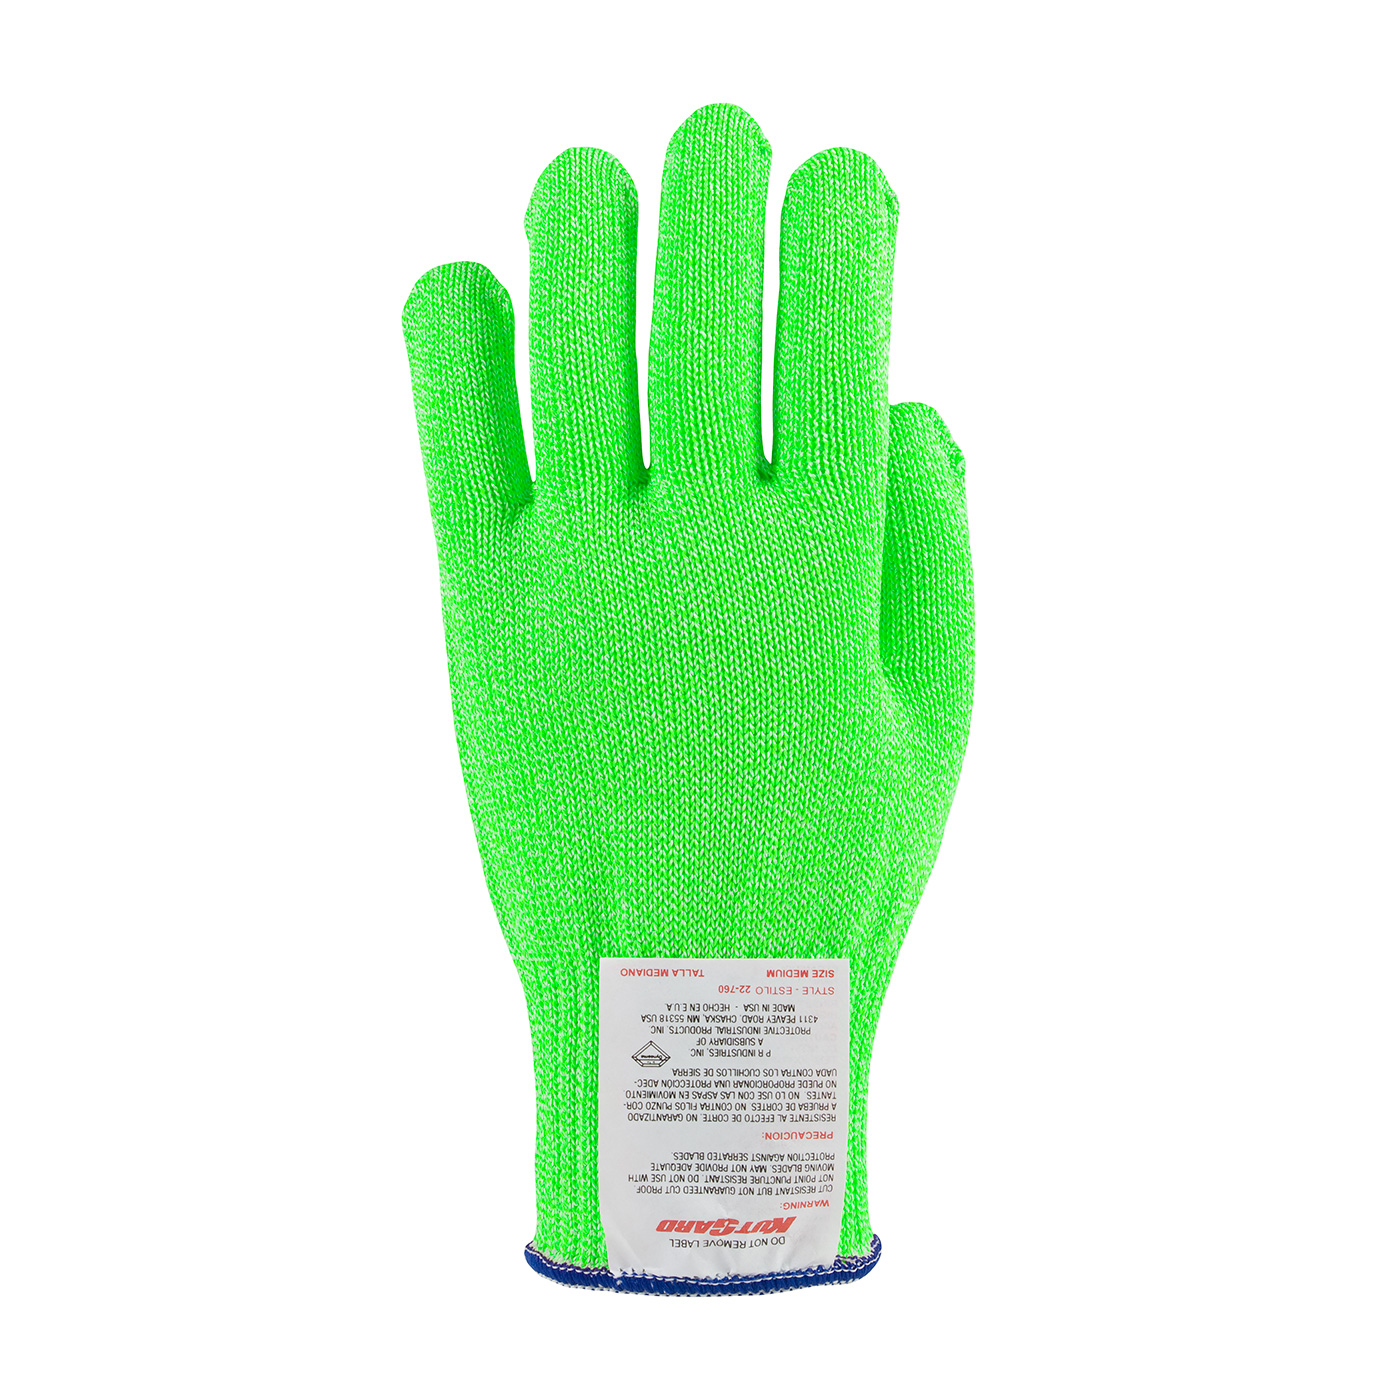 # 22 - 760 bg PIP®亮绿色Kut-Gard®®Dyneema认为不方便公开祝福nded Cut Level A7 Antimicrobial Glove - Medium Weight